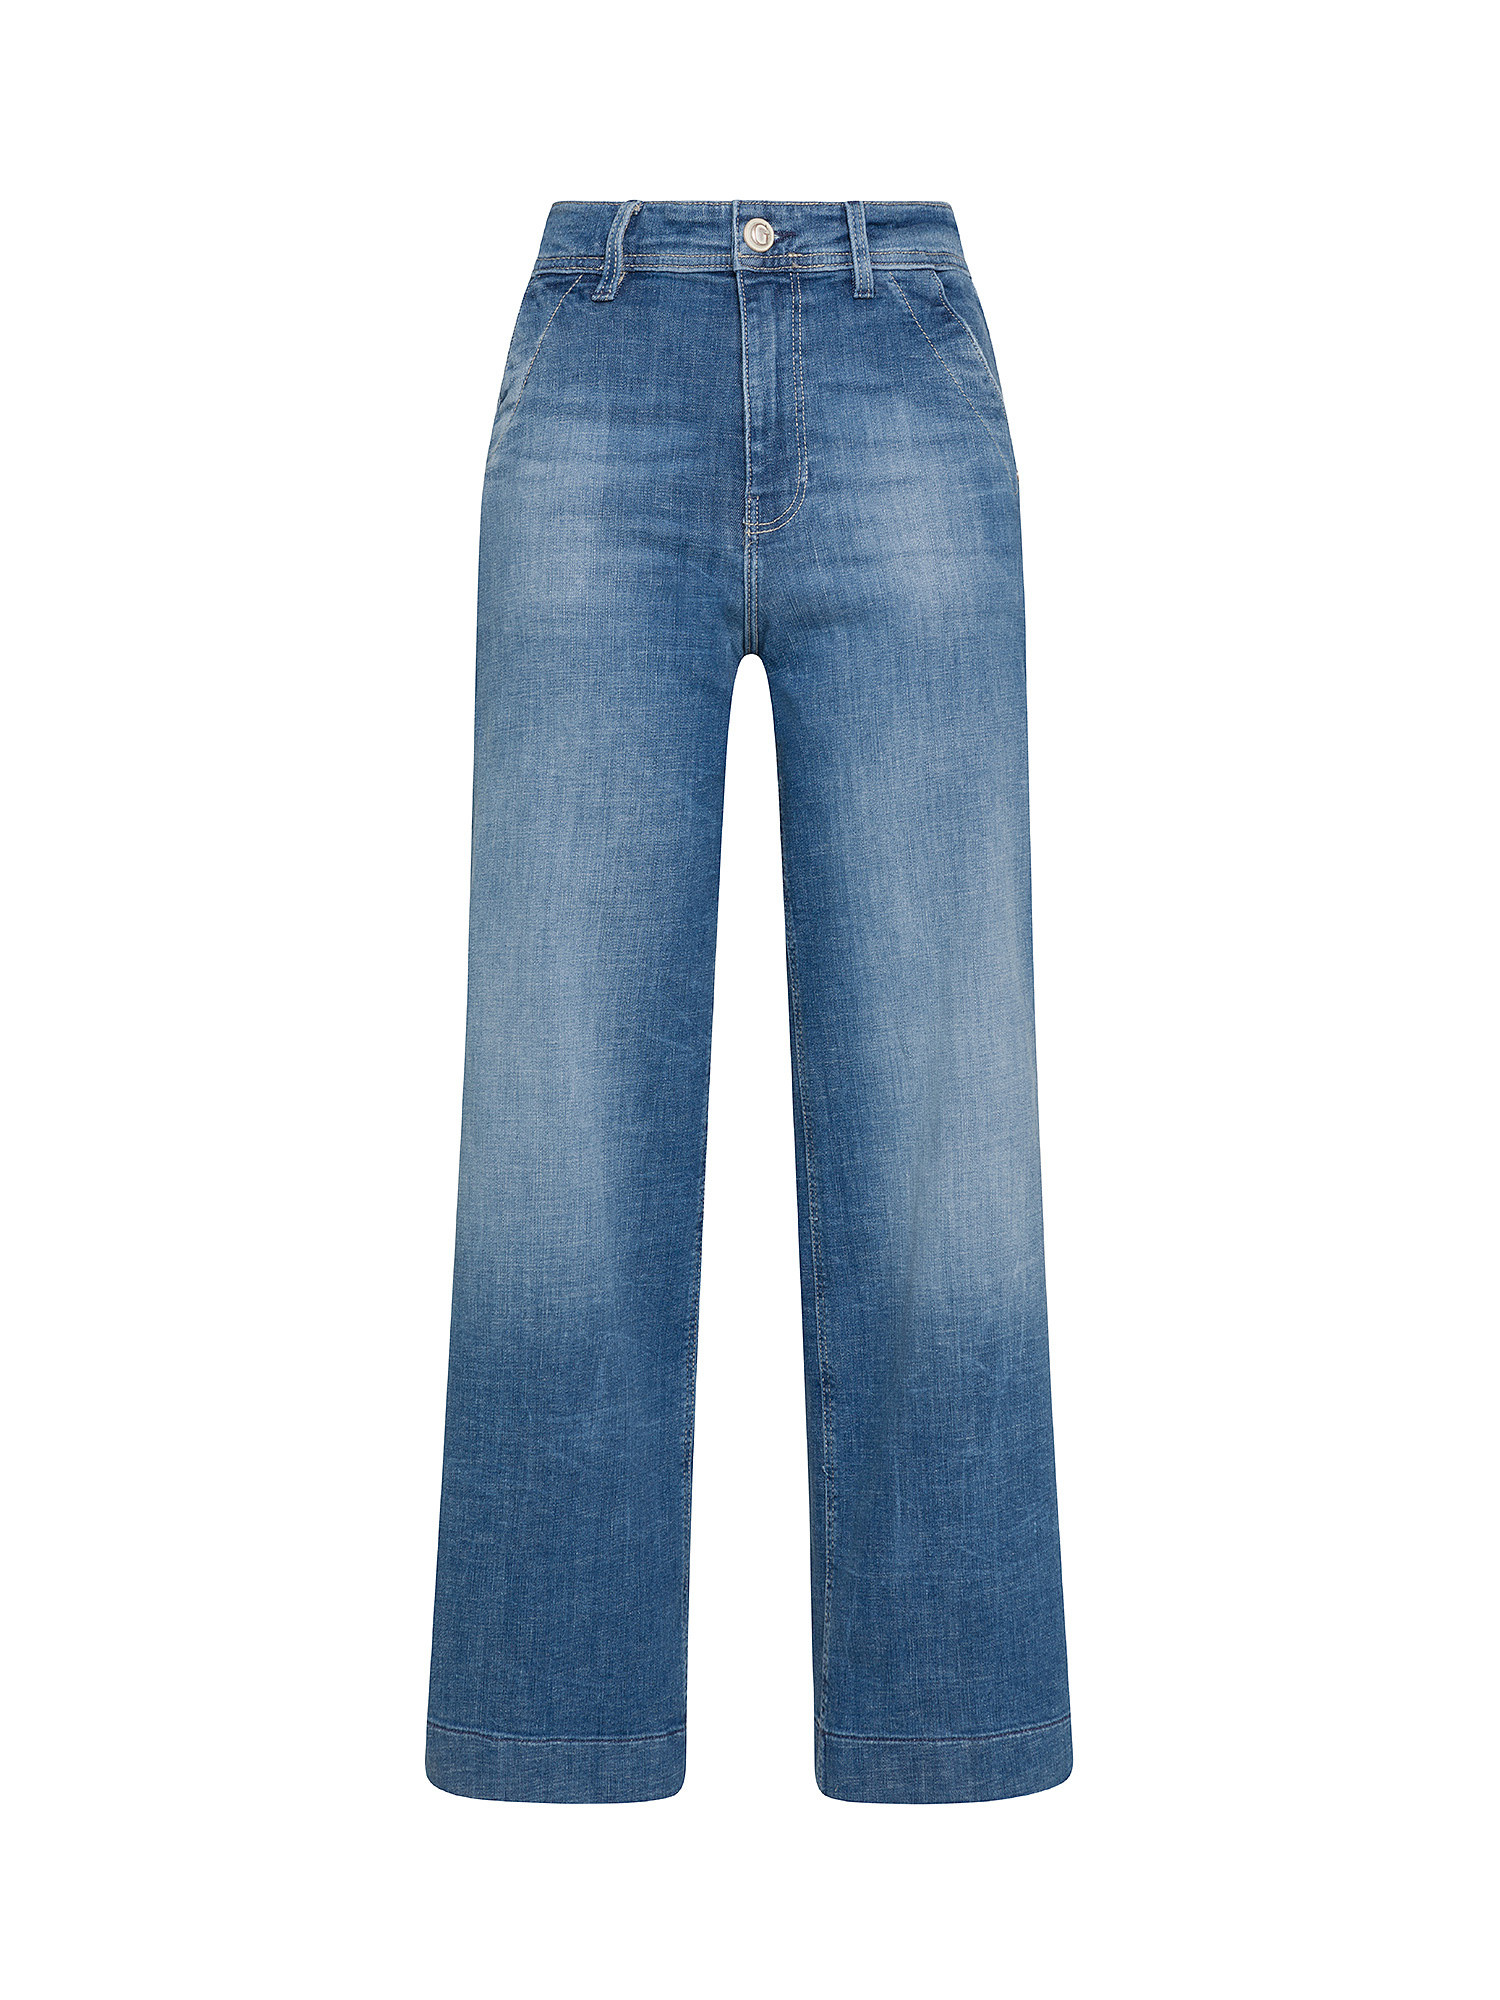 GUESS - Jeans wide leg a vita alta, Denim, large image number 0